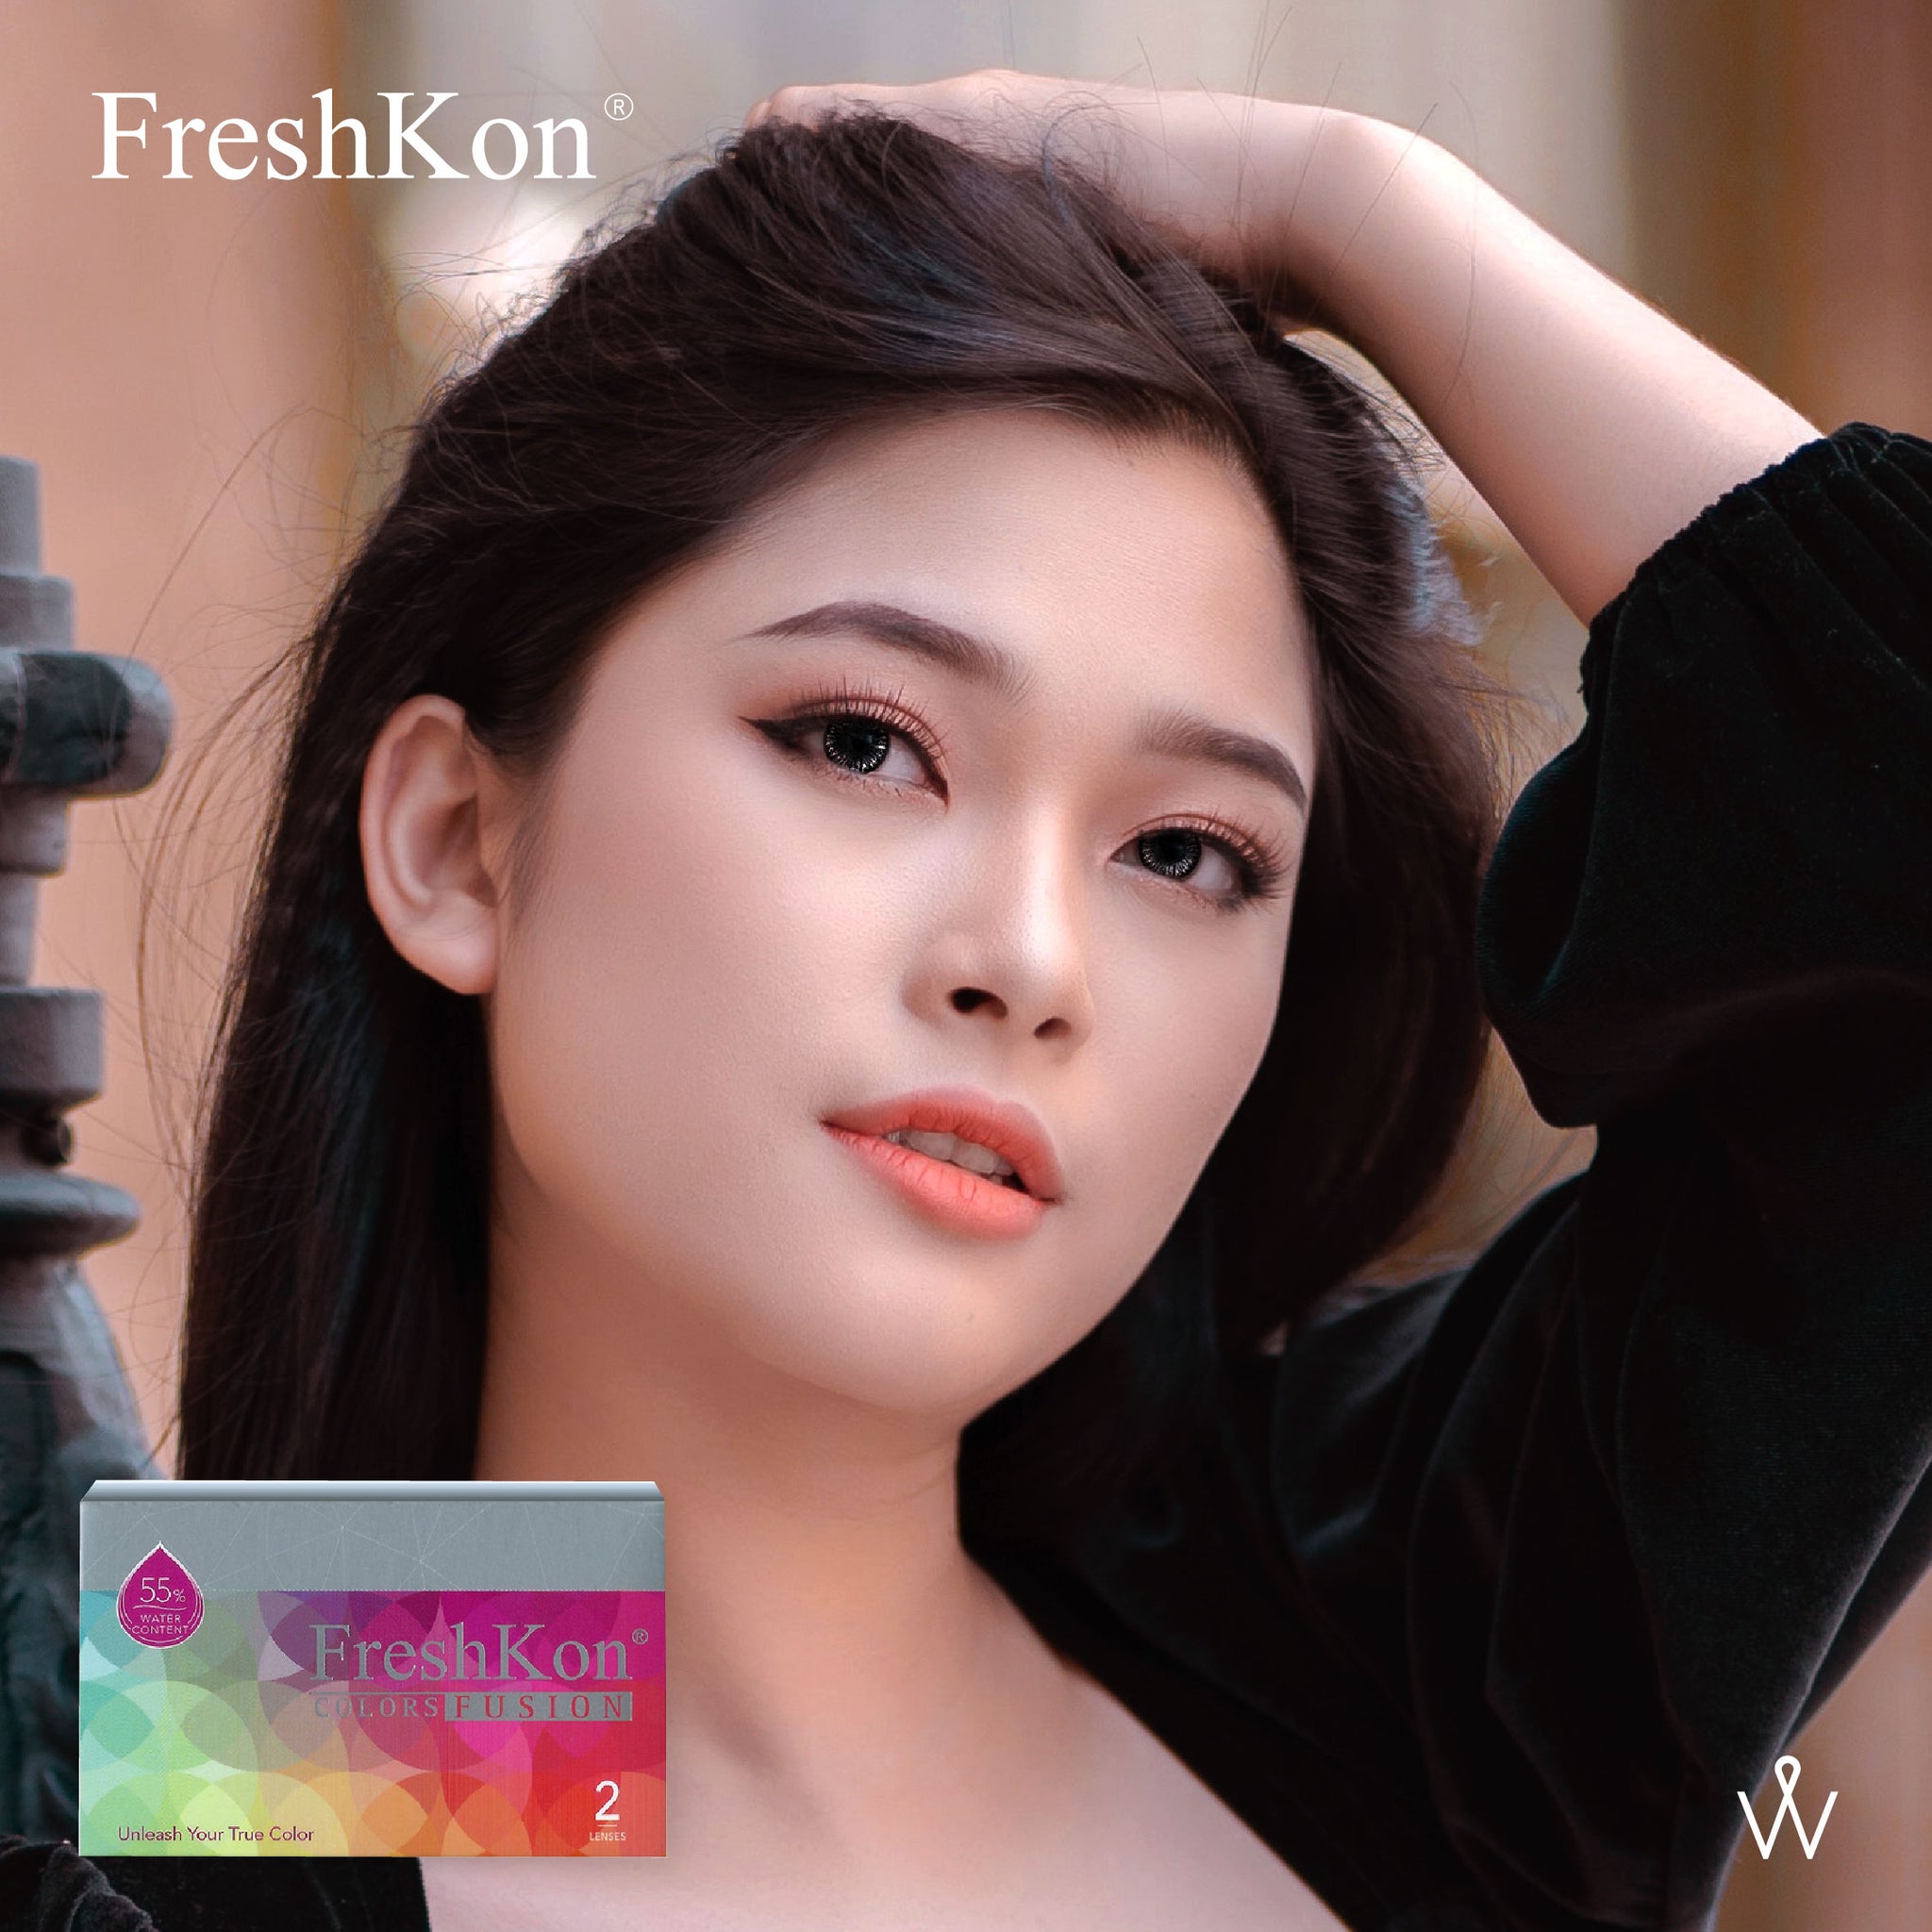 FreshKon® Colors Fusion (Monthly - 2PCS)